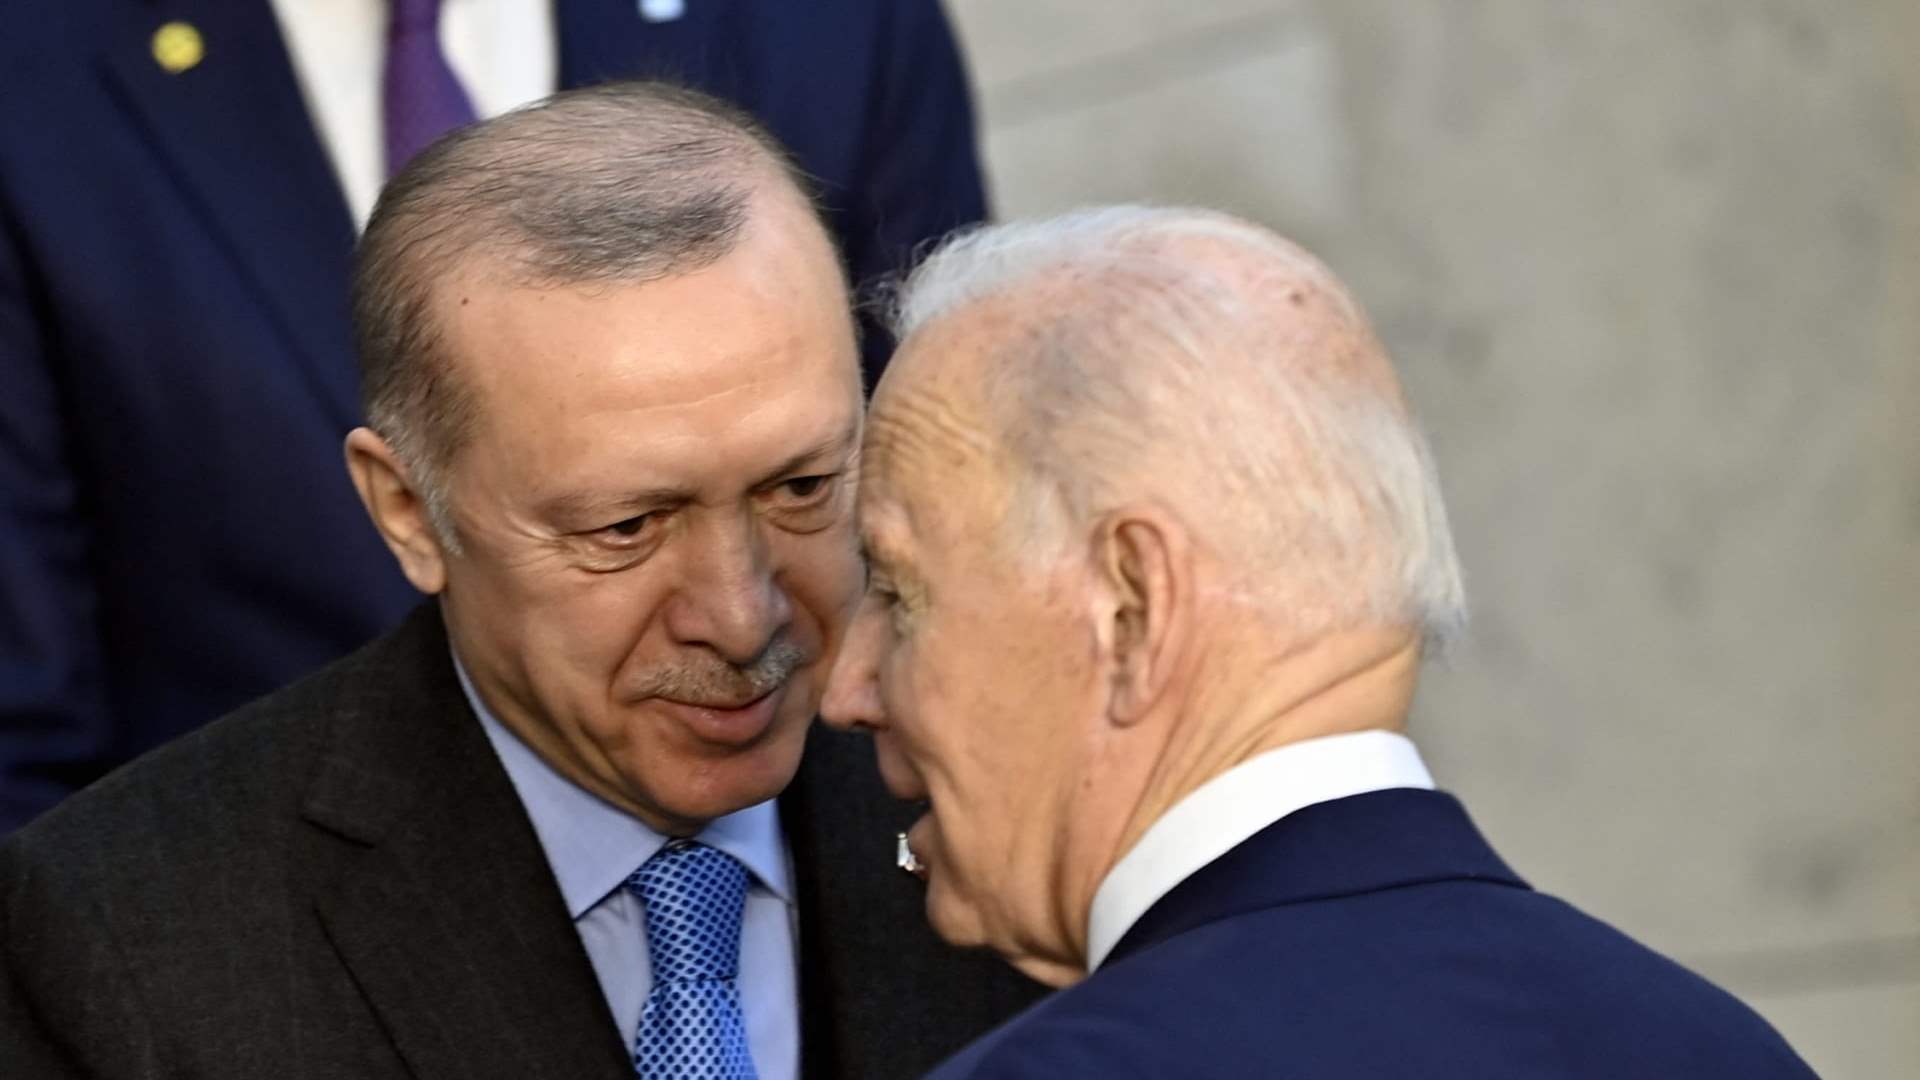 الاجتماع المقرر عقده بين أردوغان وبايدن تأجل